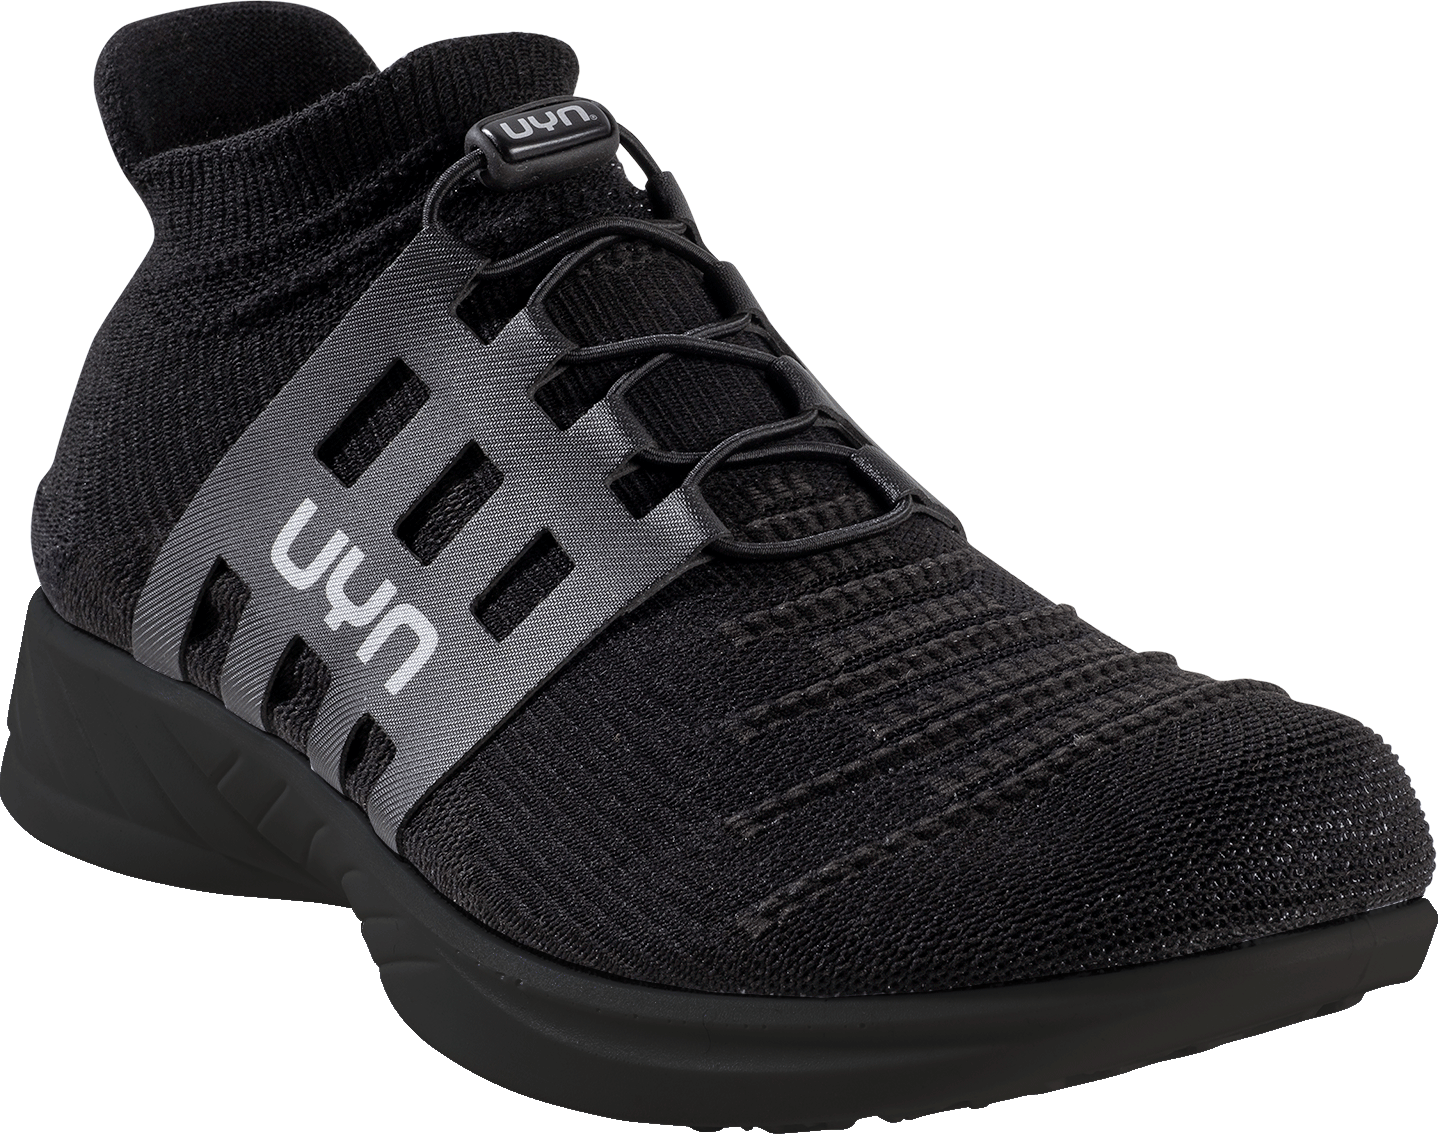 UYN Man X-Cross Tune Schuh black sole